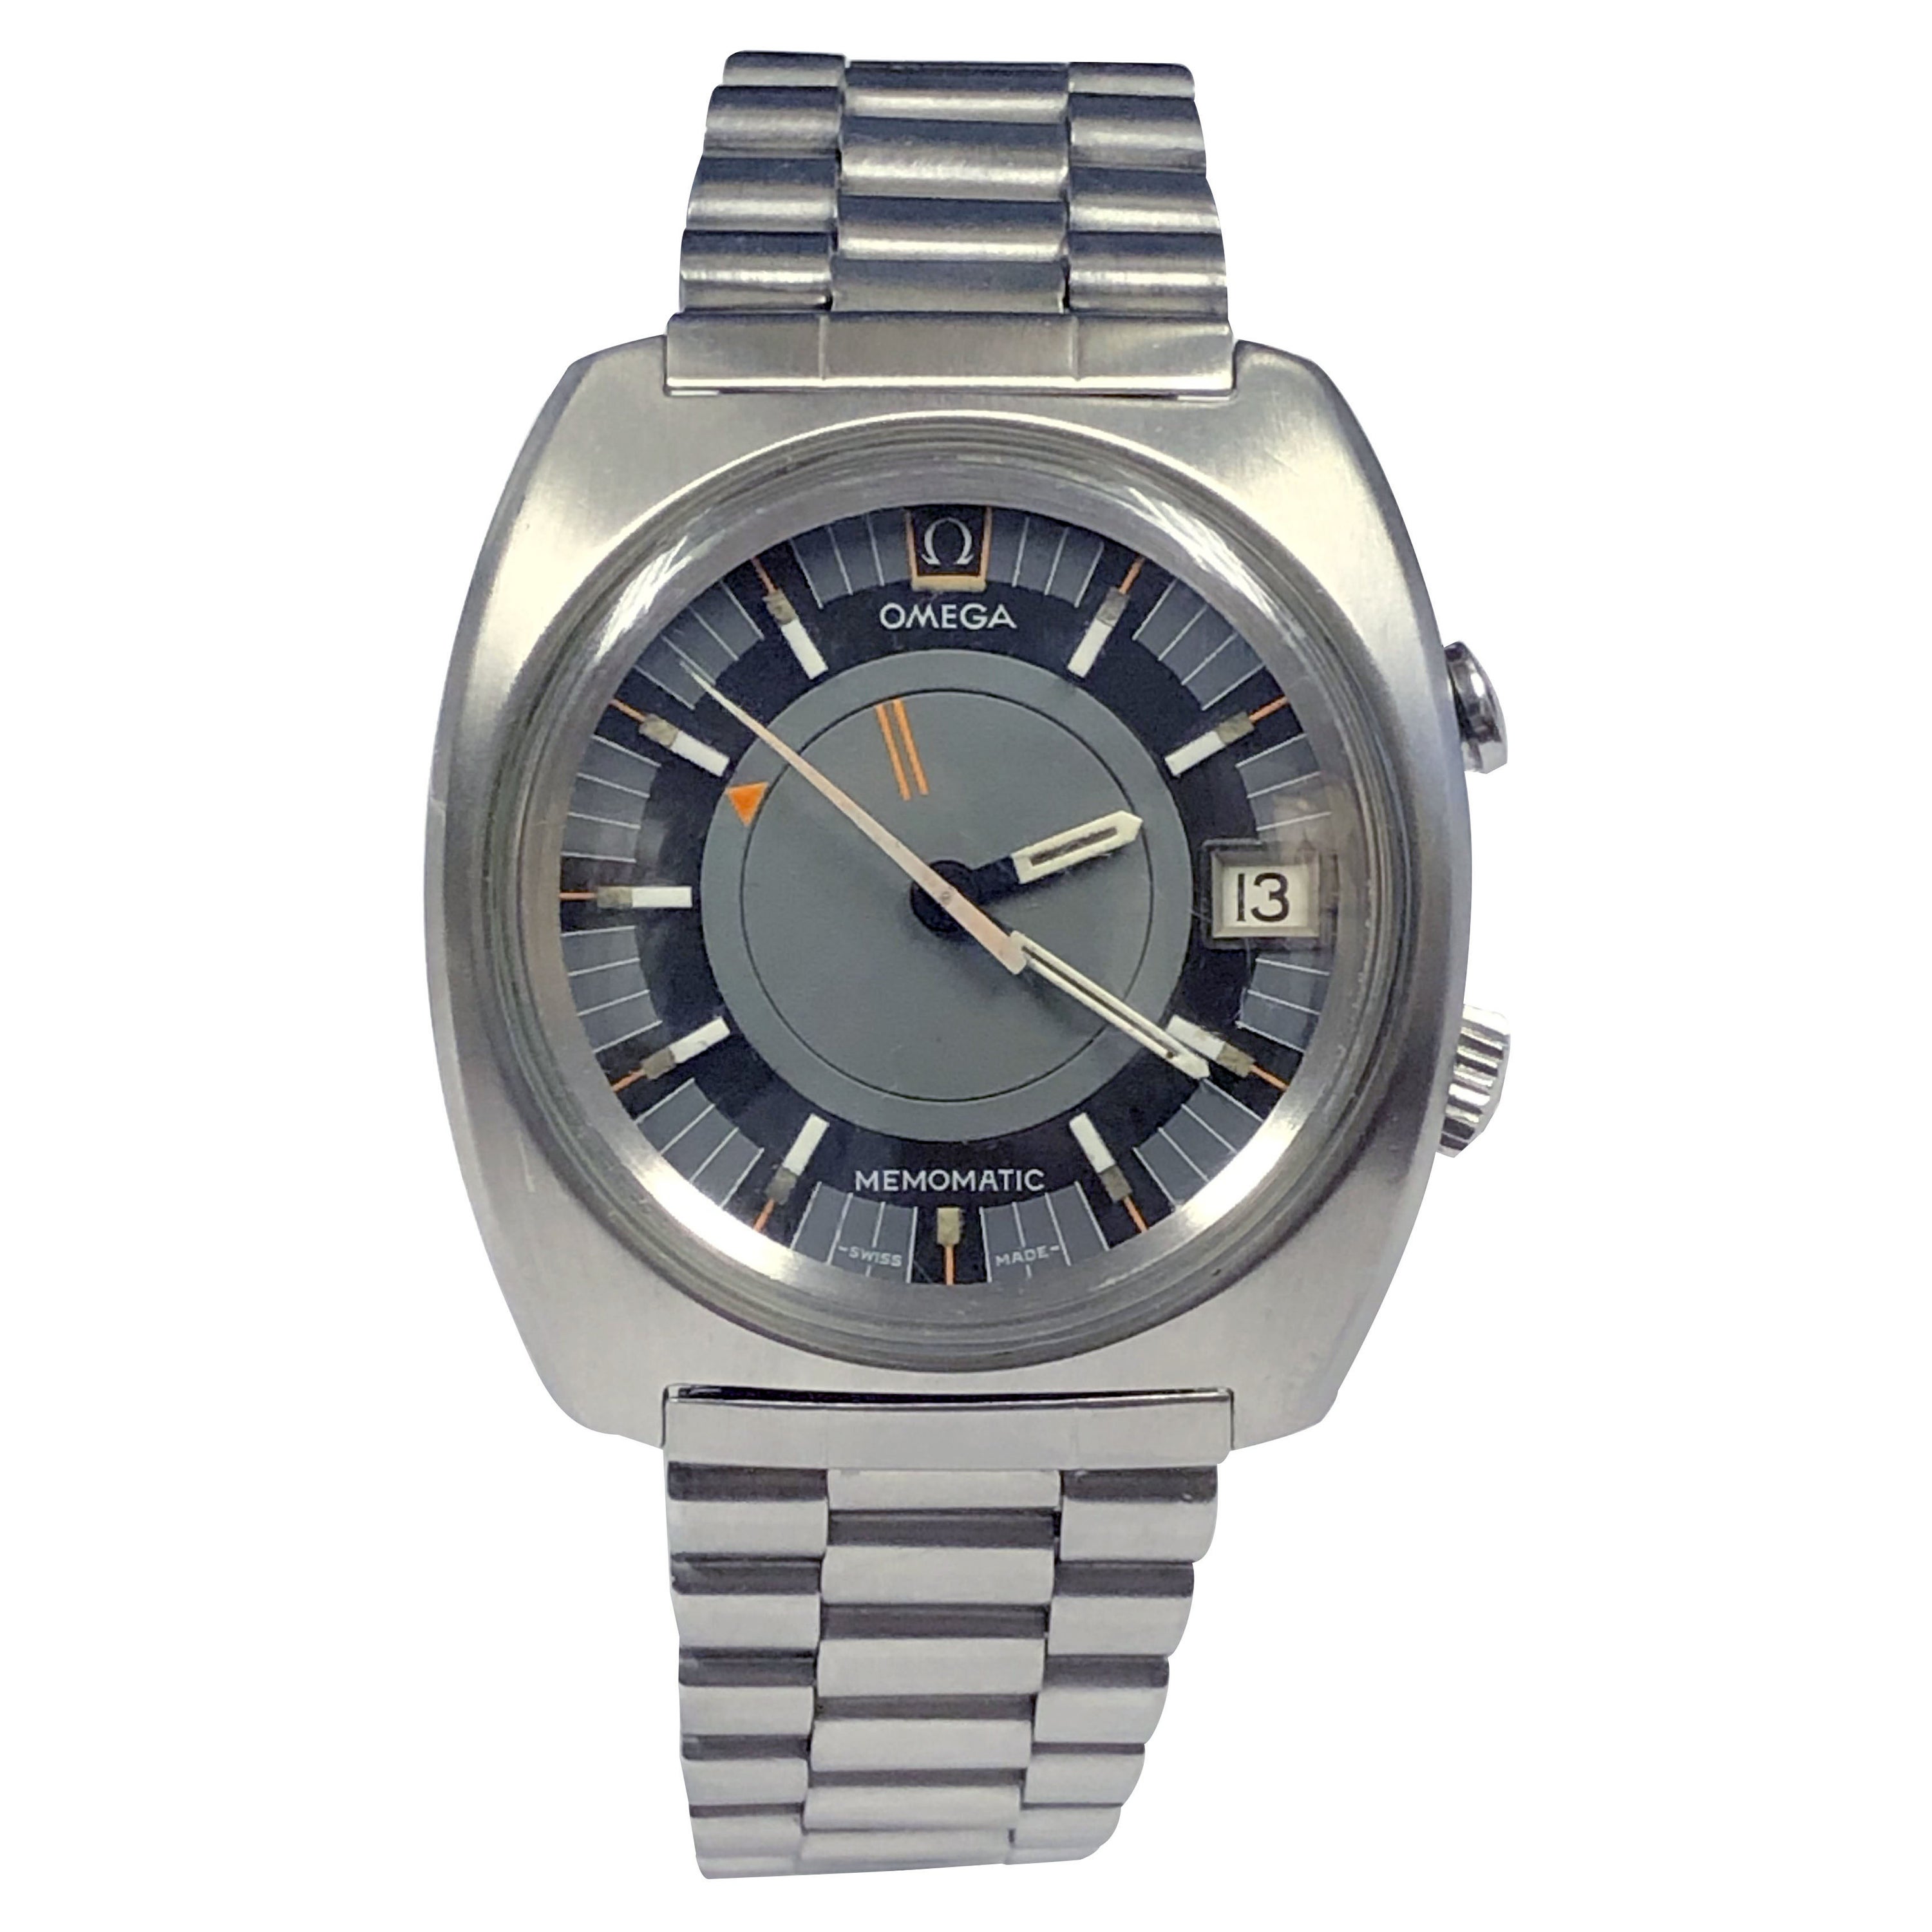 Vintage Omega Seamaster Memomatic Self Winding Alarm Wrist Watch For Sale